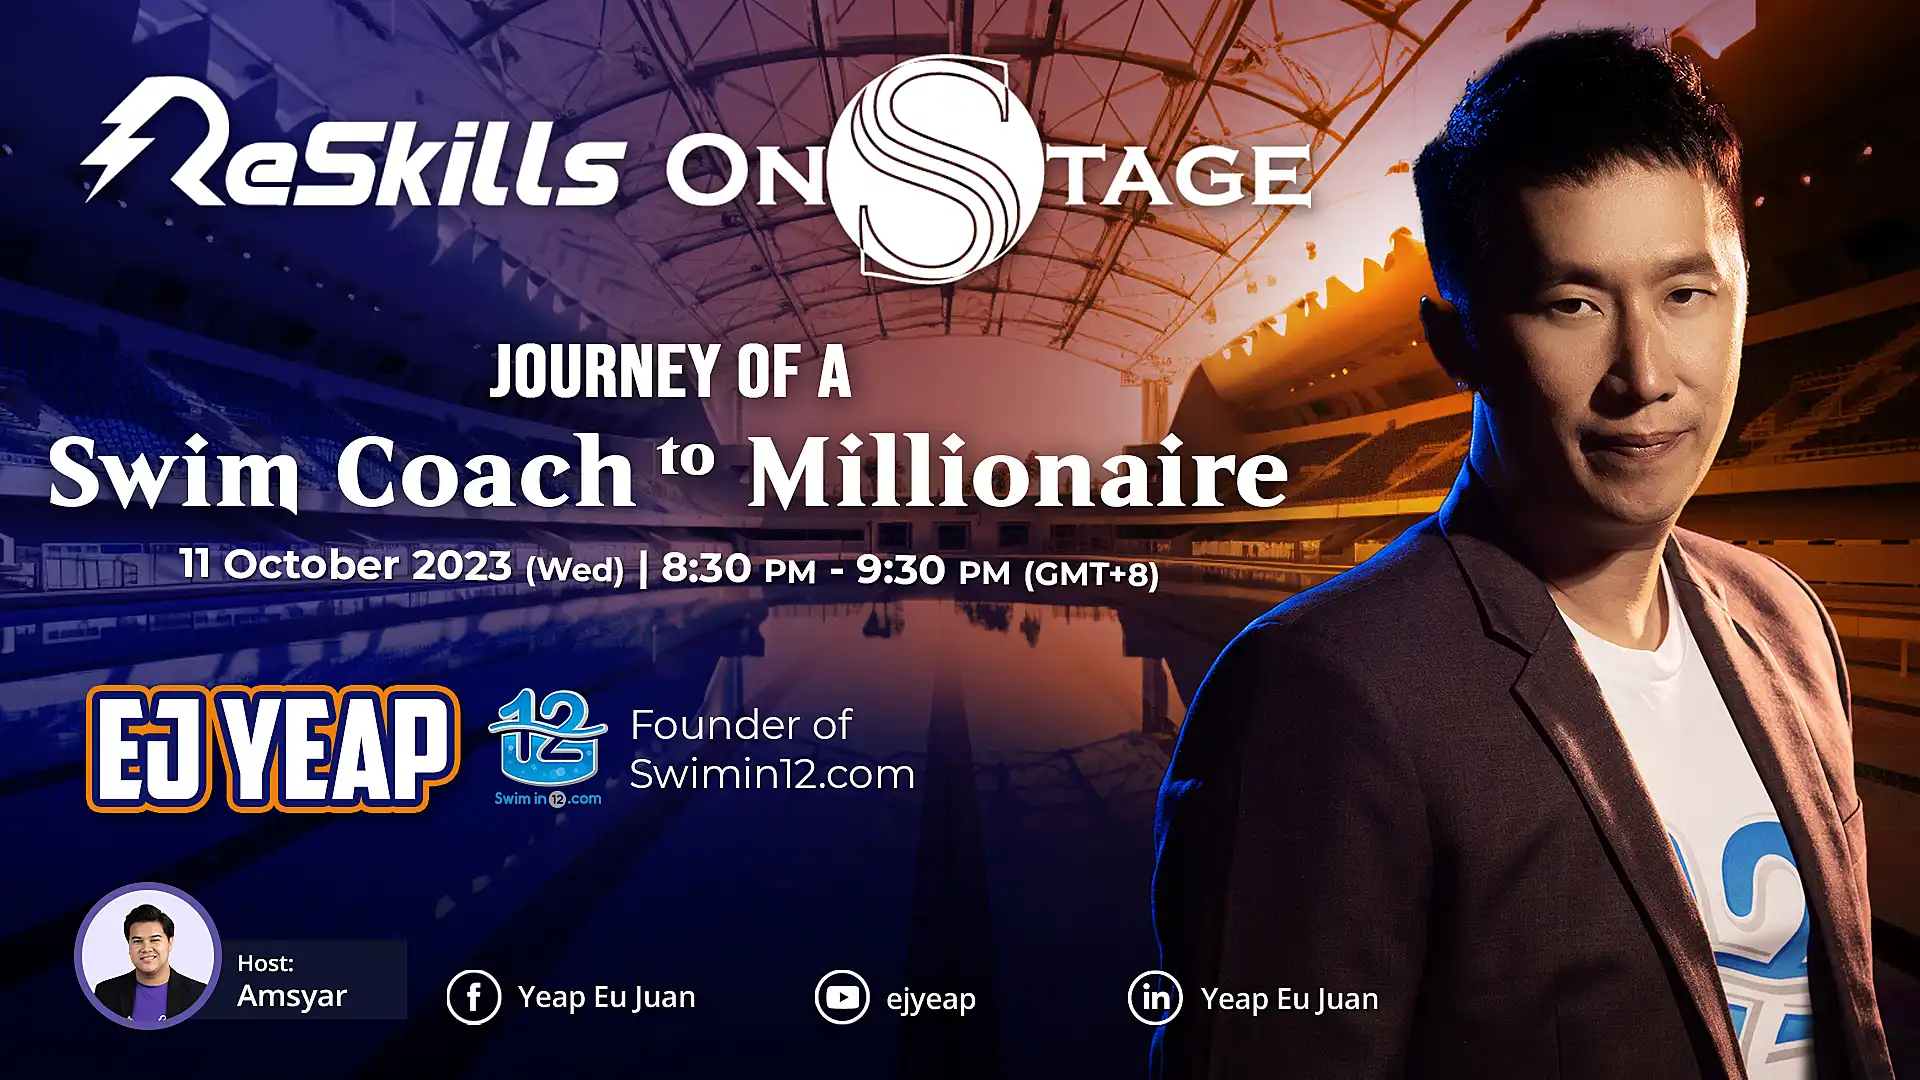 Journey of a Swim Coach to Millionaire - ReSkills